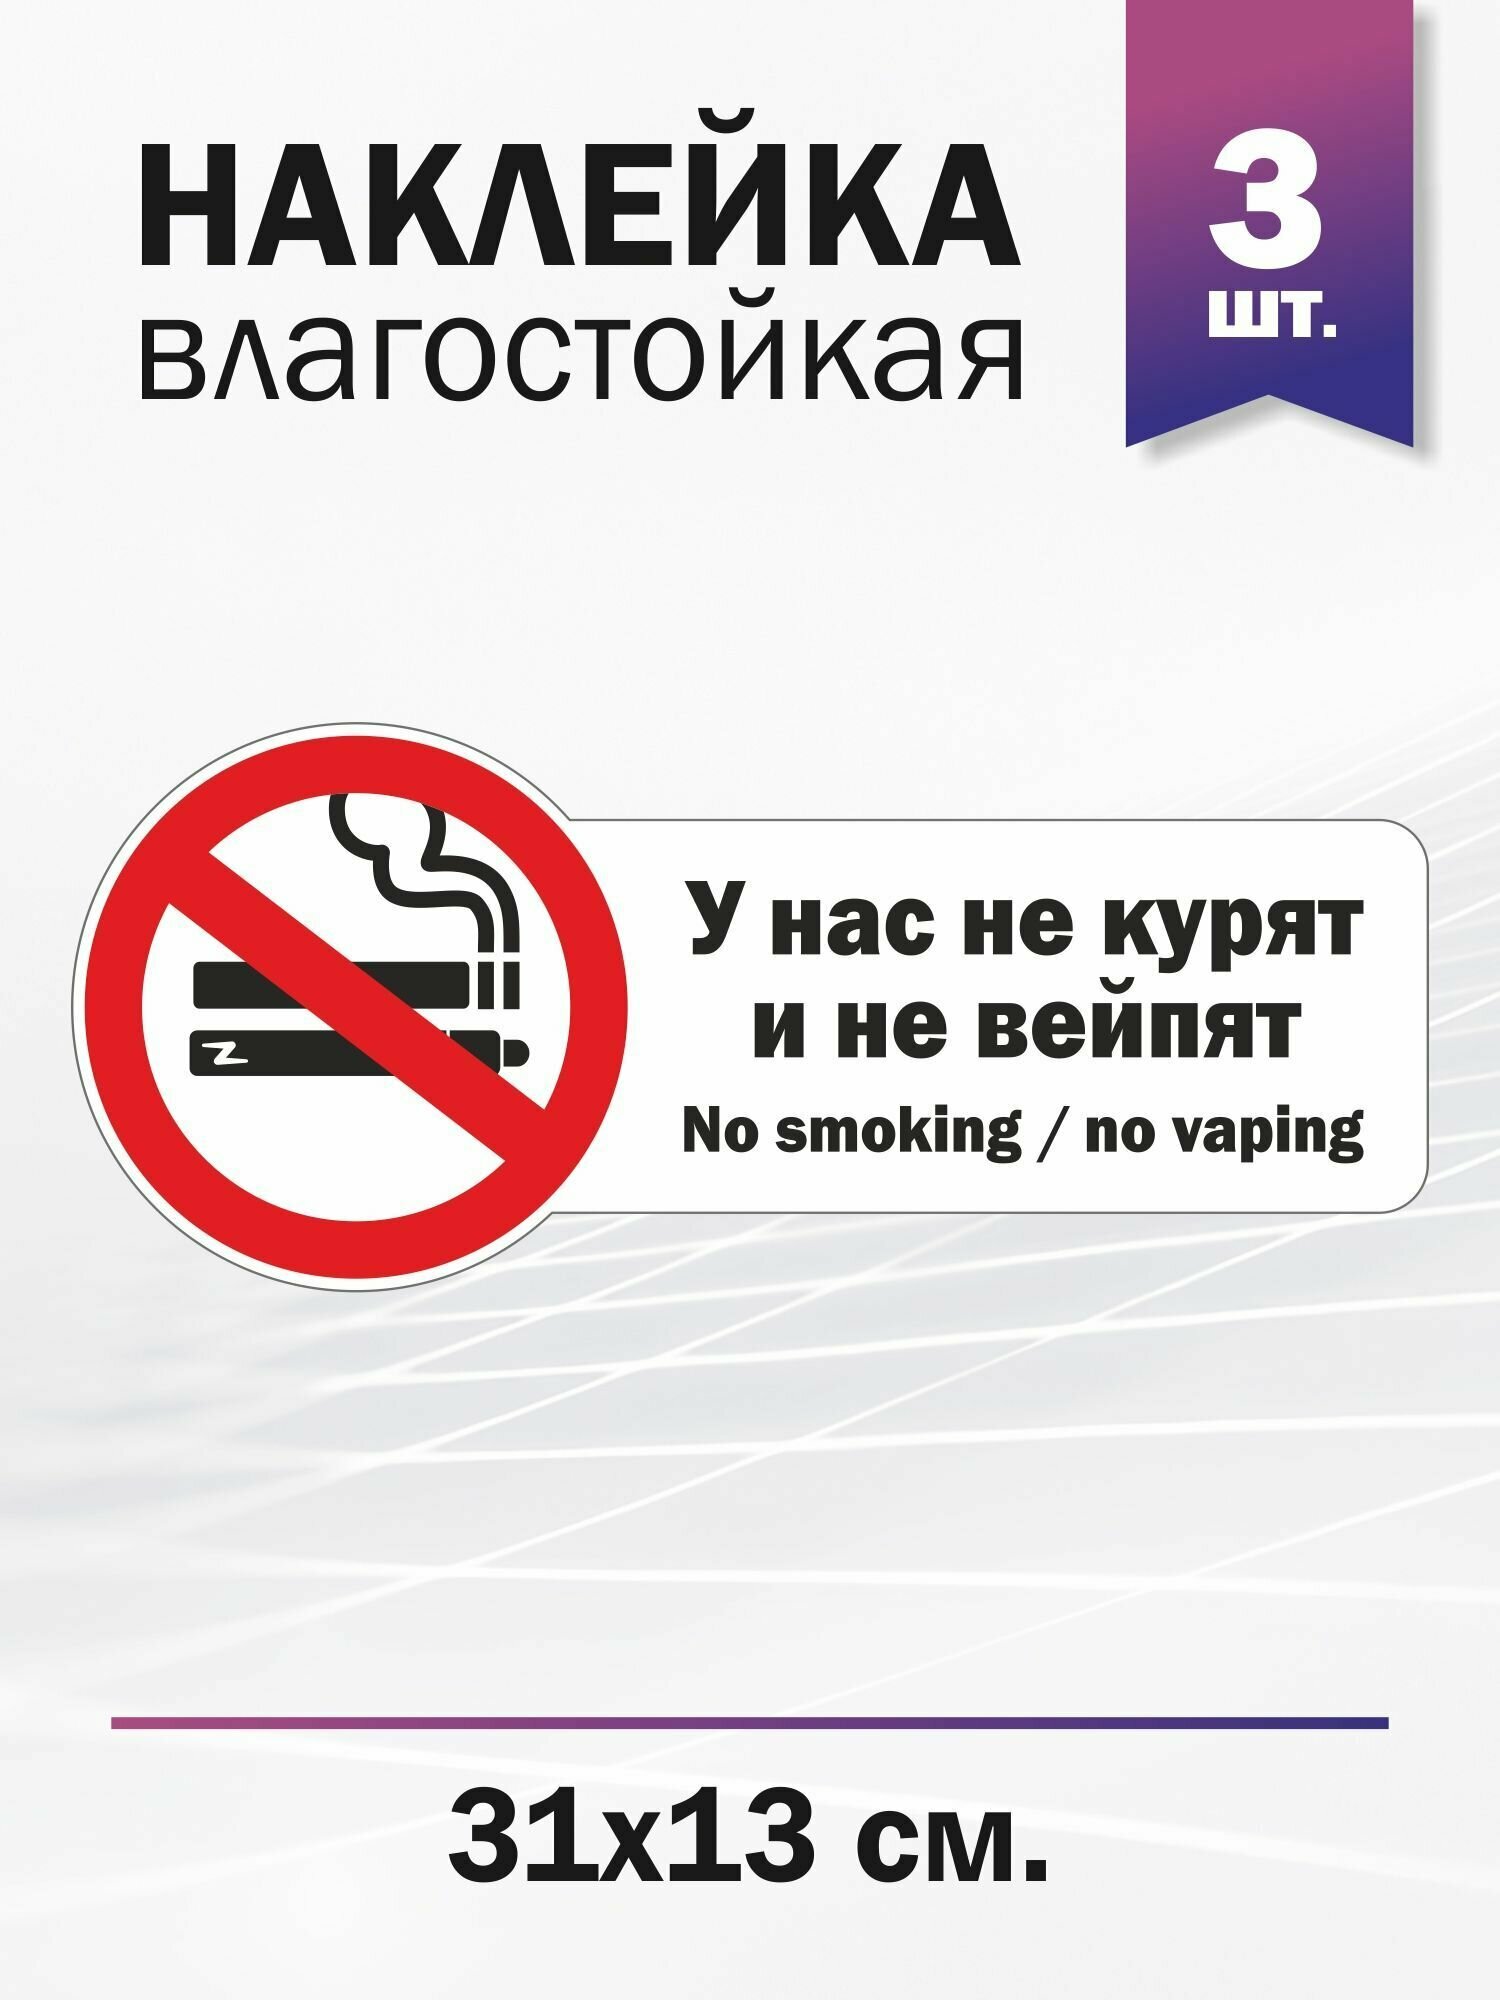 У нас не курят и не вейпят/ no smoking/no vaping, 3 штуки